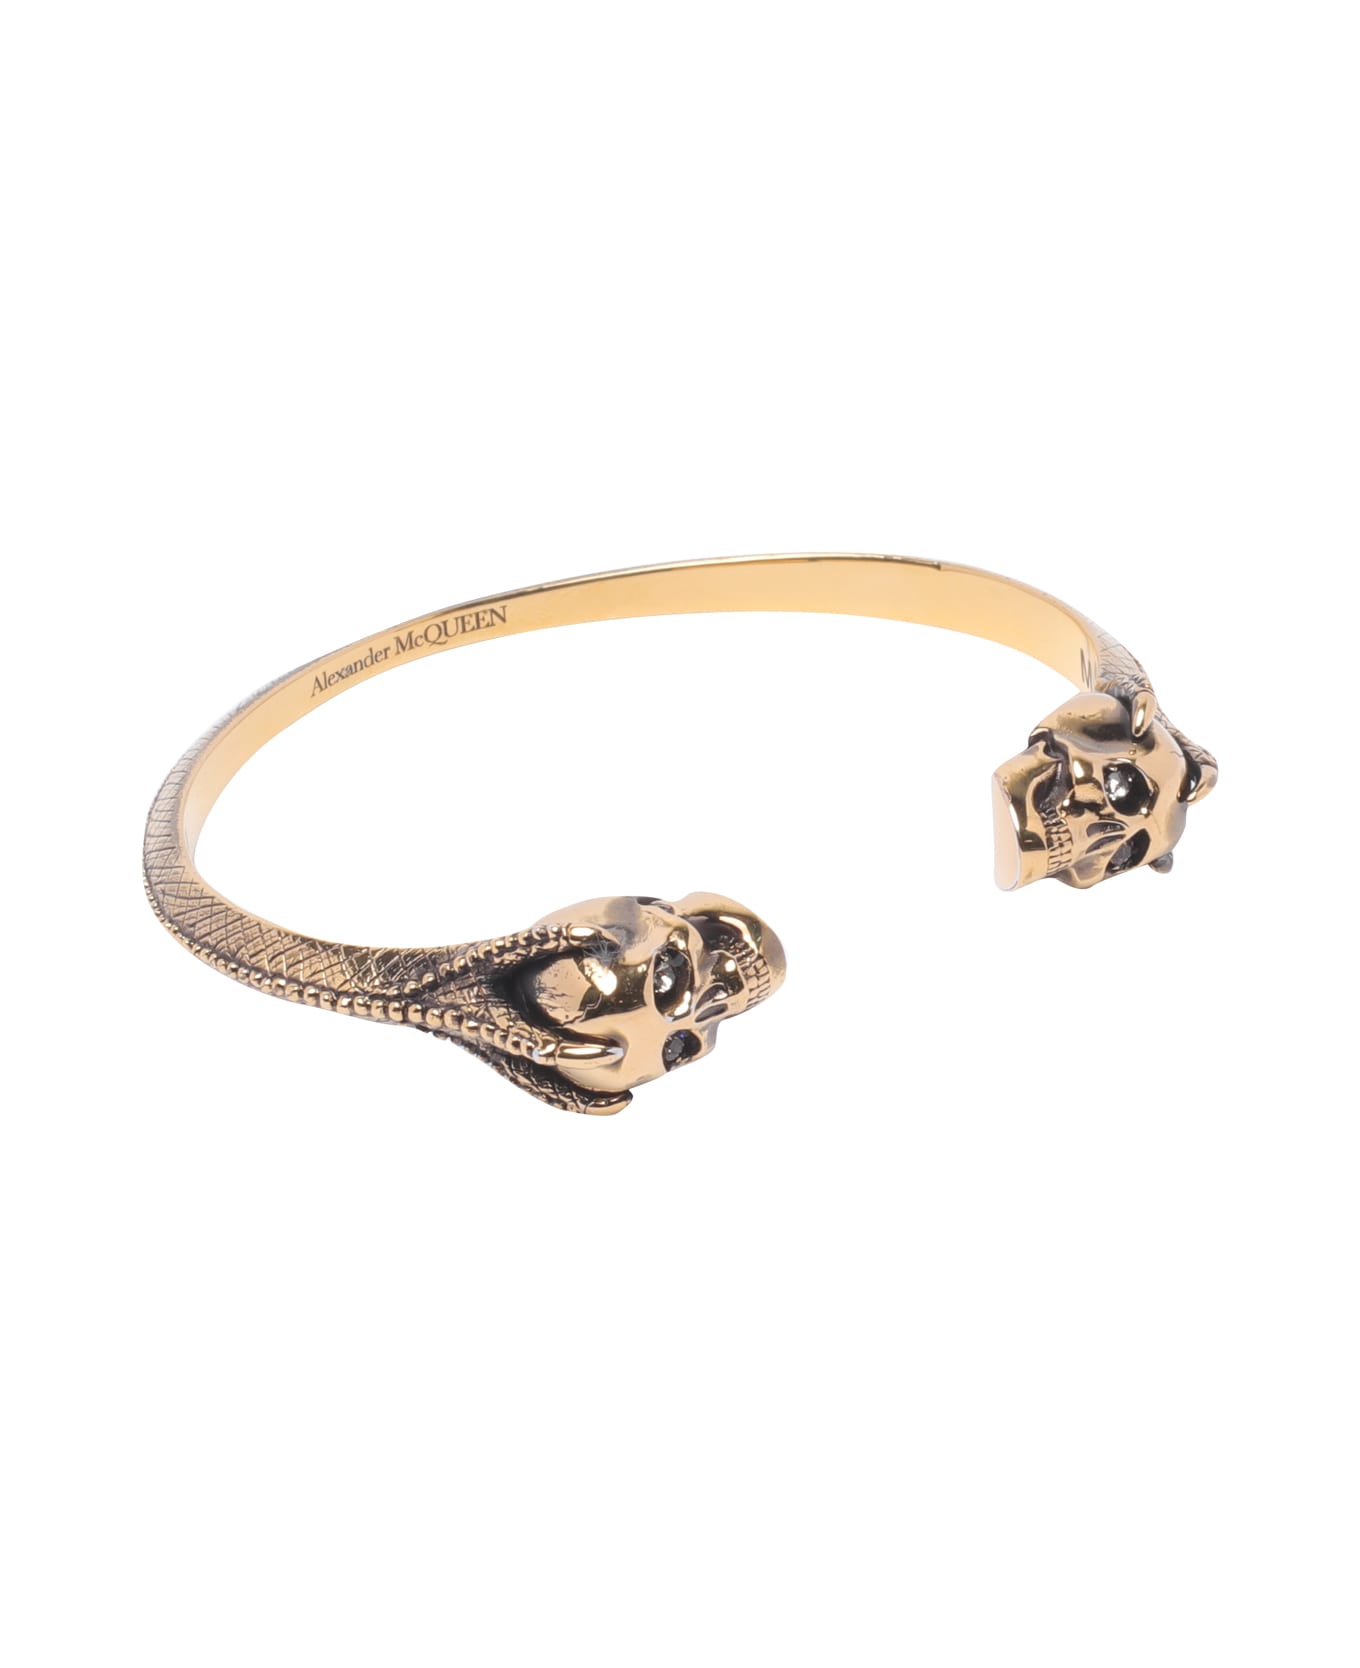 Alexander McQueen Skull Bracelet - Golden ブレスレット